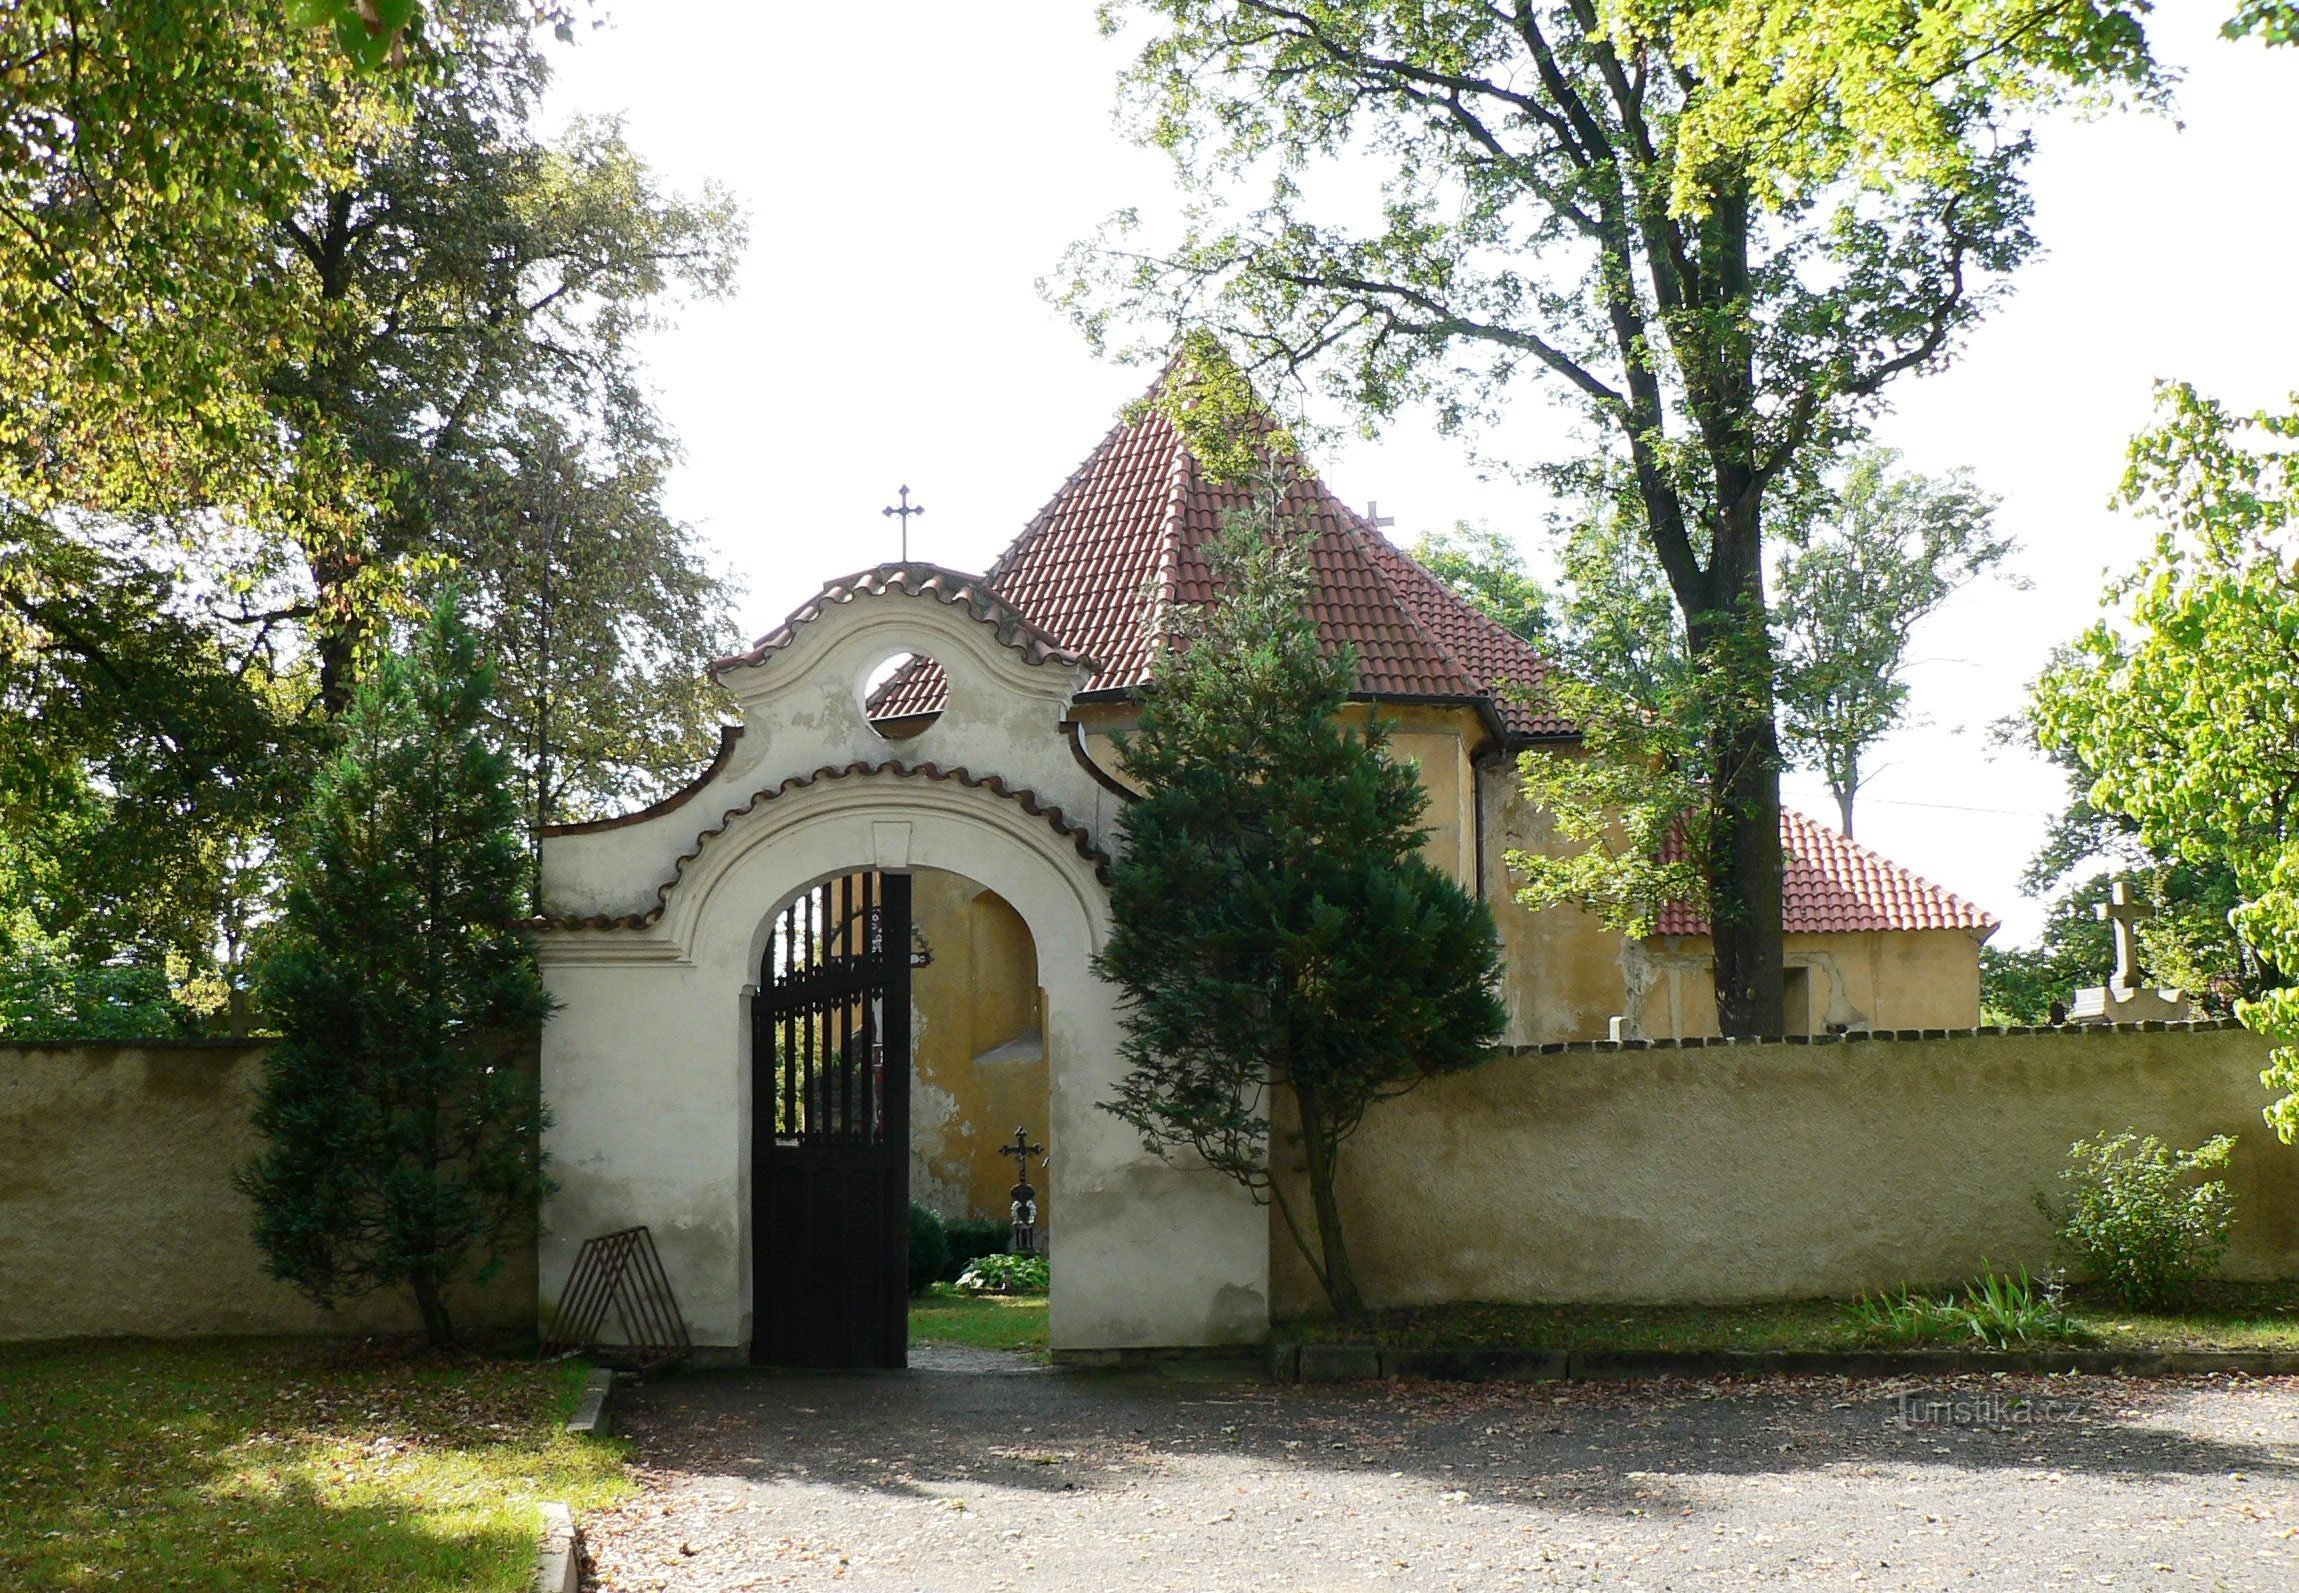 barokk bejárati kapu a temetőbe